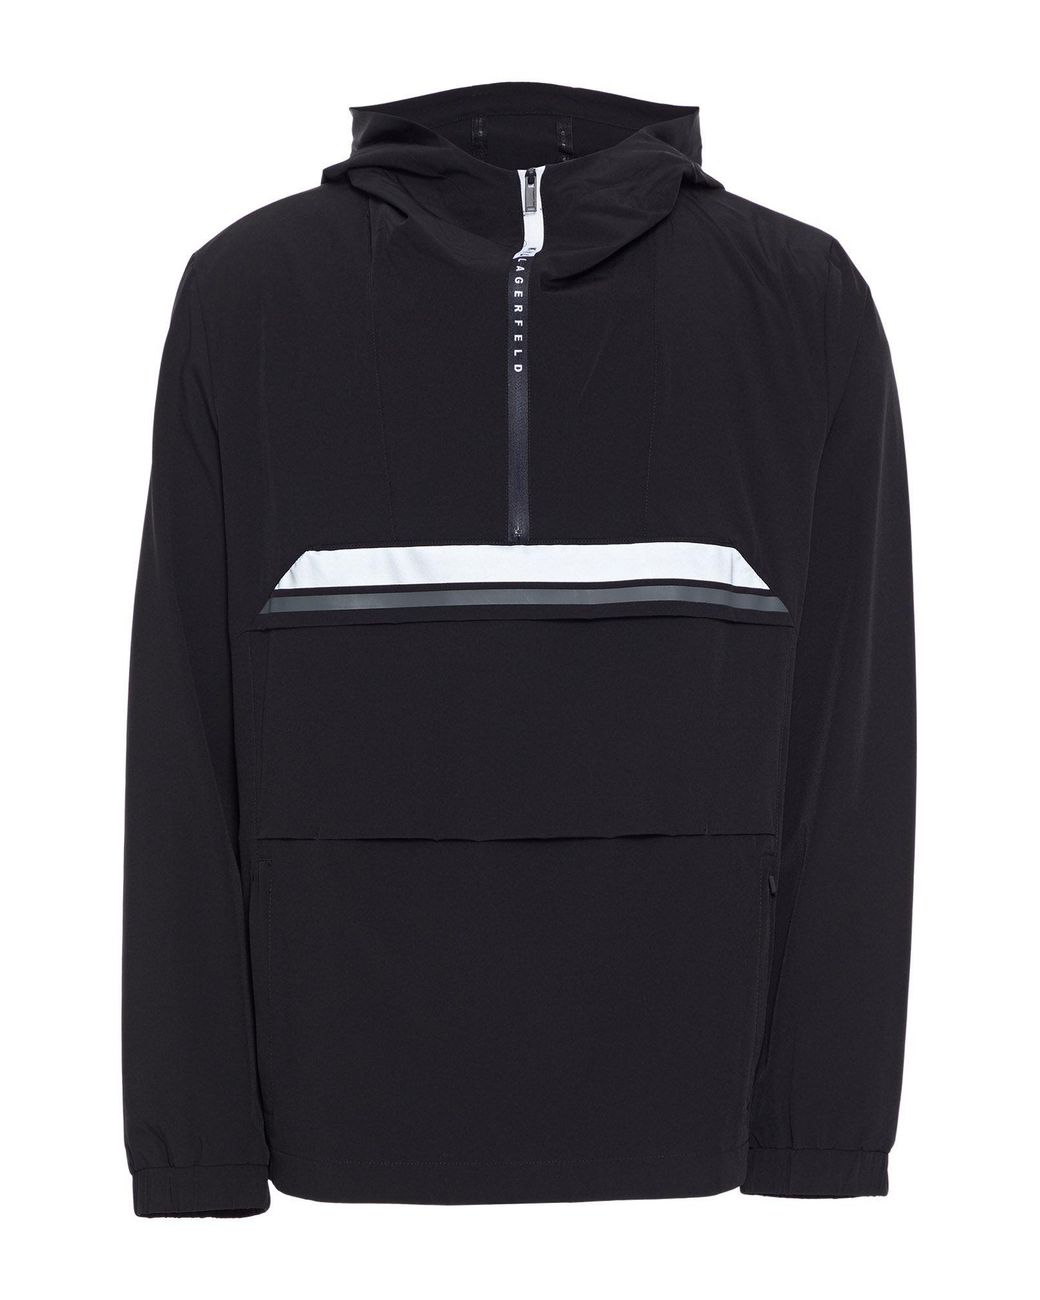 Karl Lagerfeld Synthetic Jacket in Black for Men - Lyst